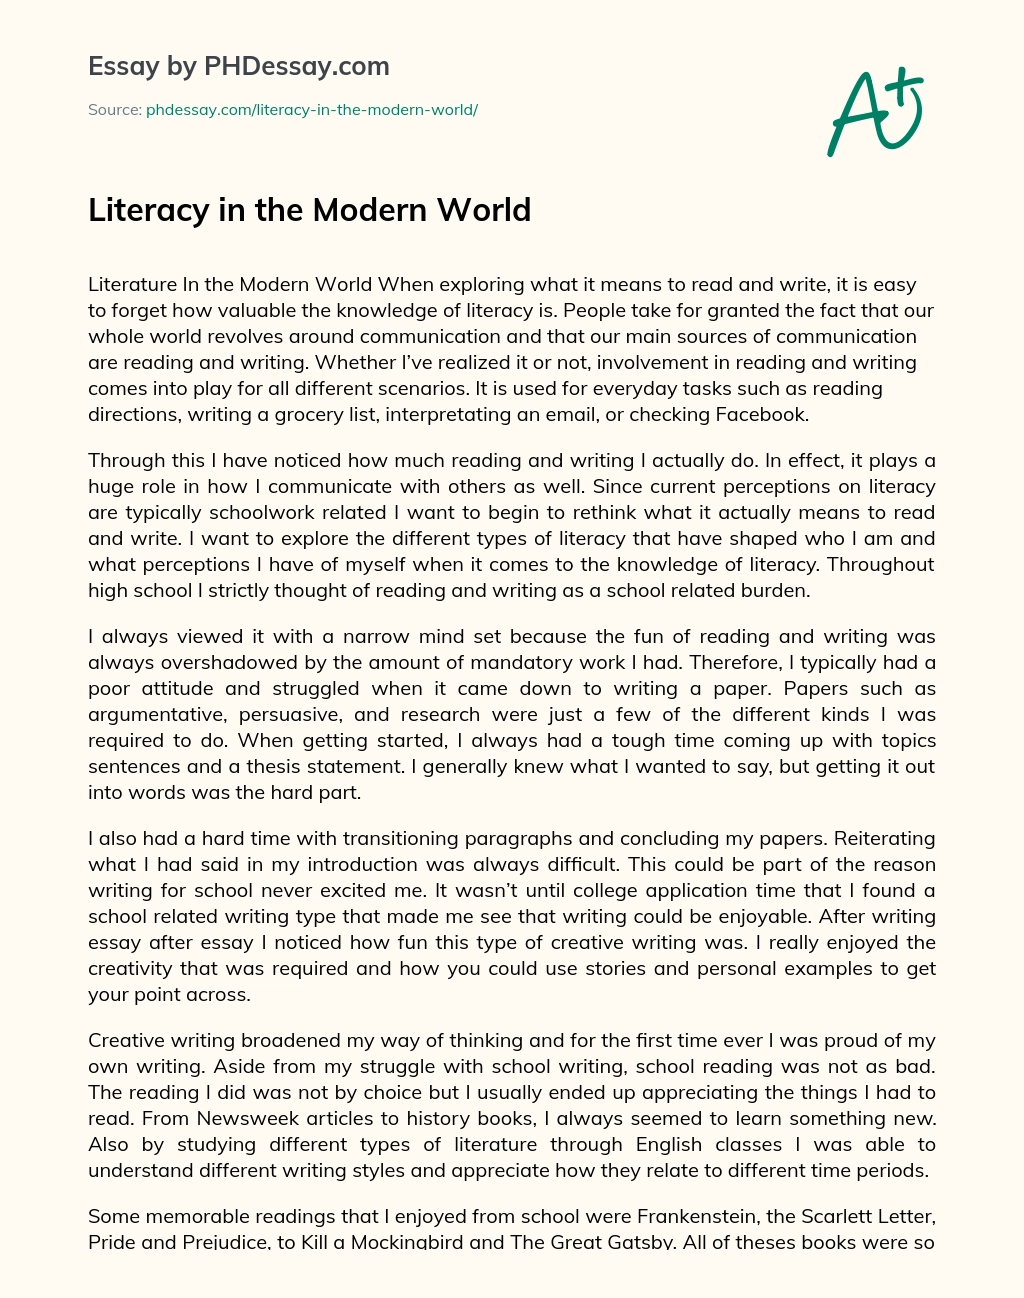 Literacy in the Modern World essay